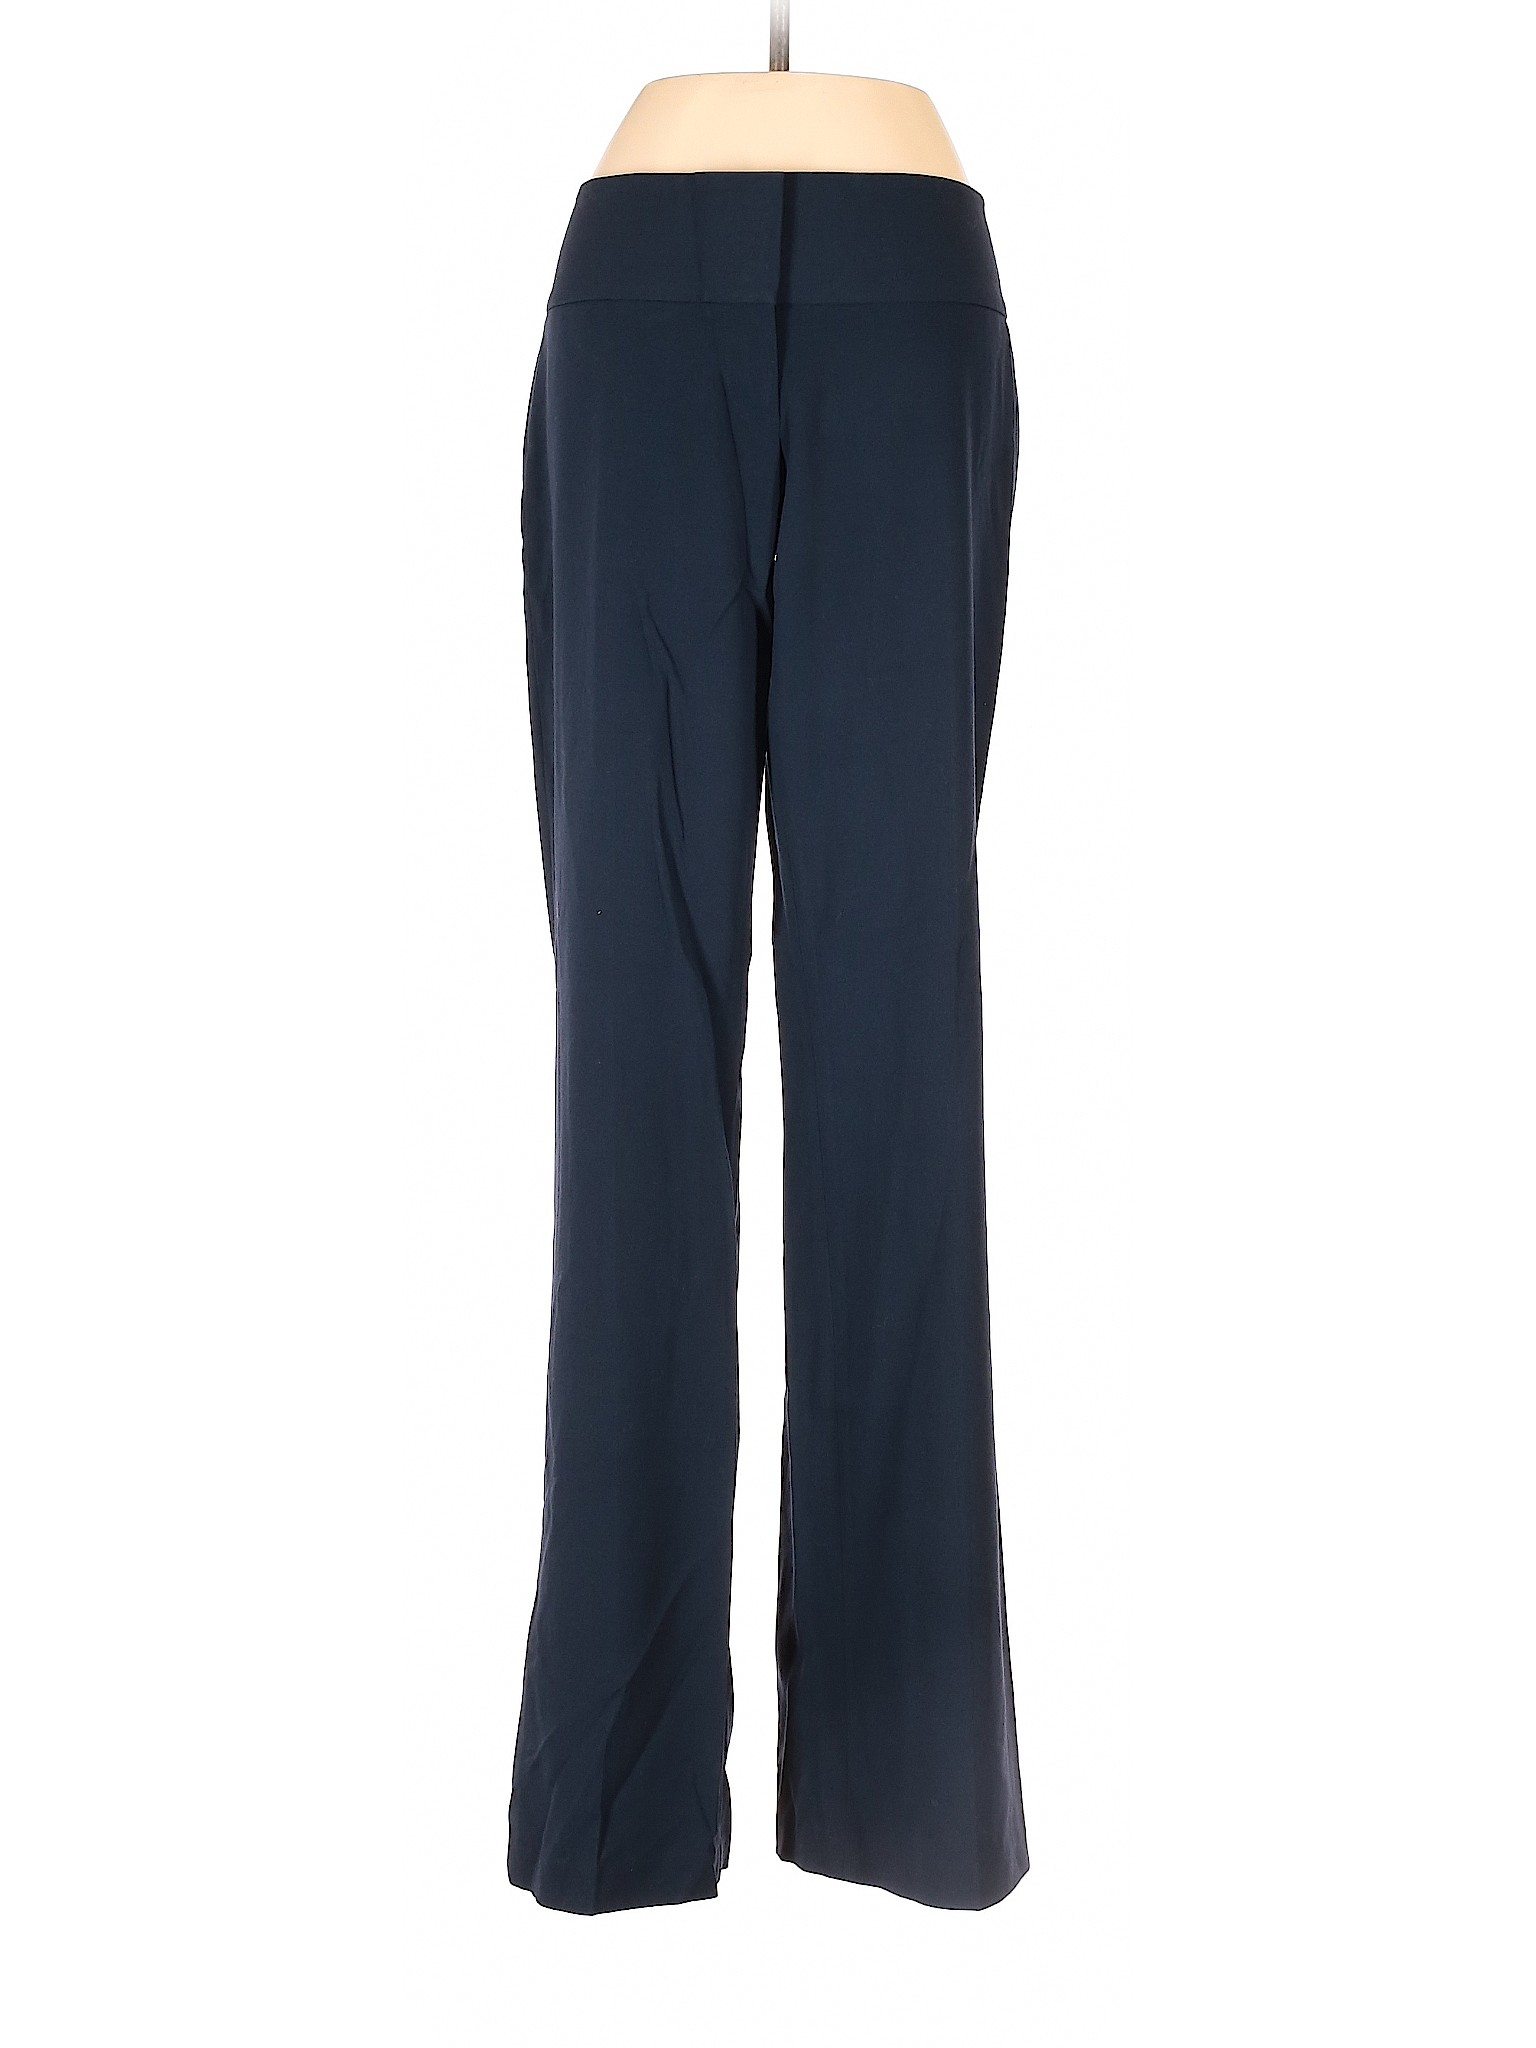 NWT Arden B. Women Blue Dress Pants 0 | eBay